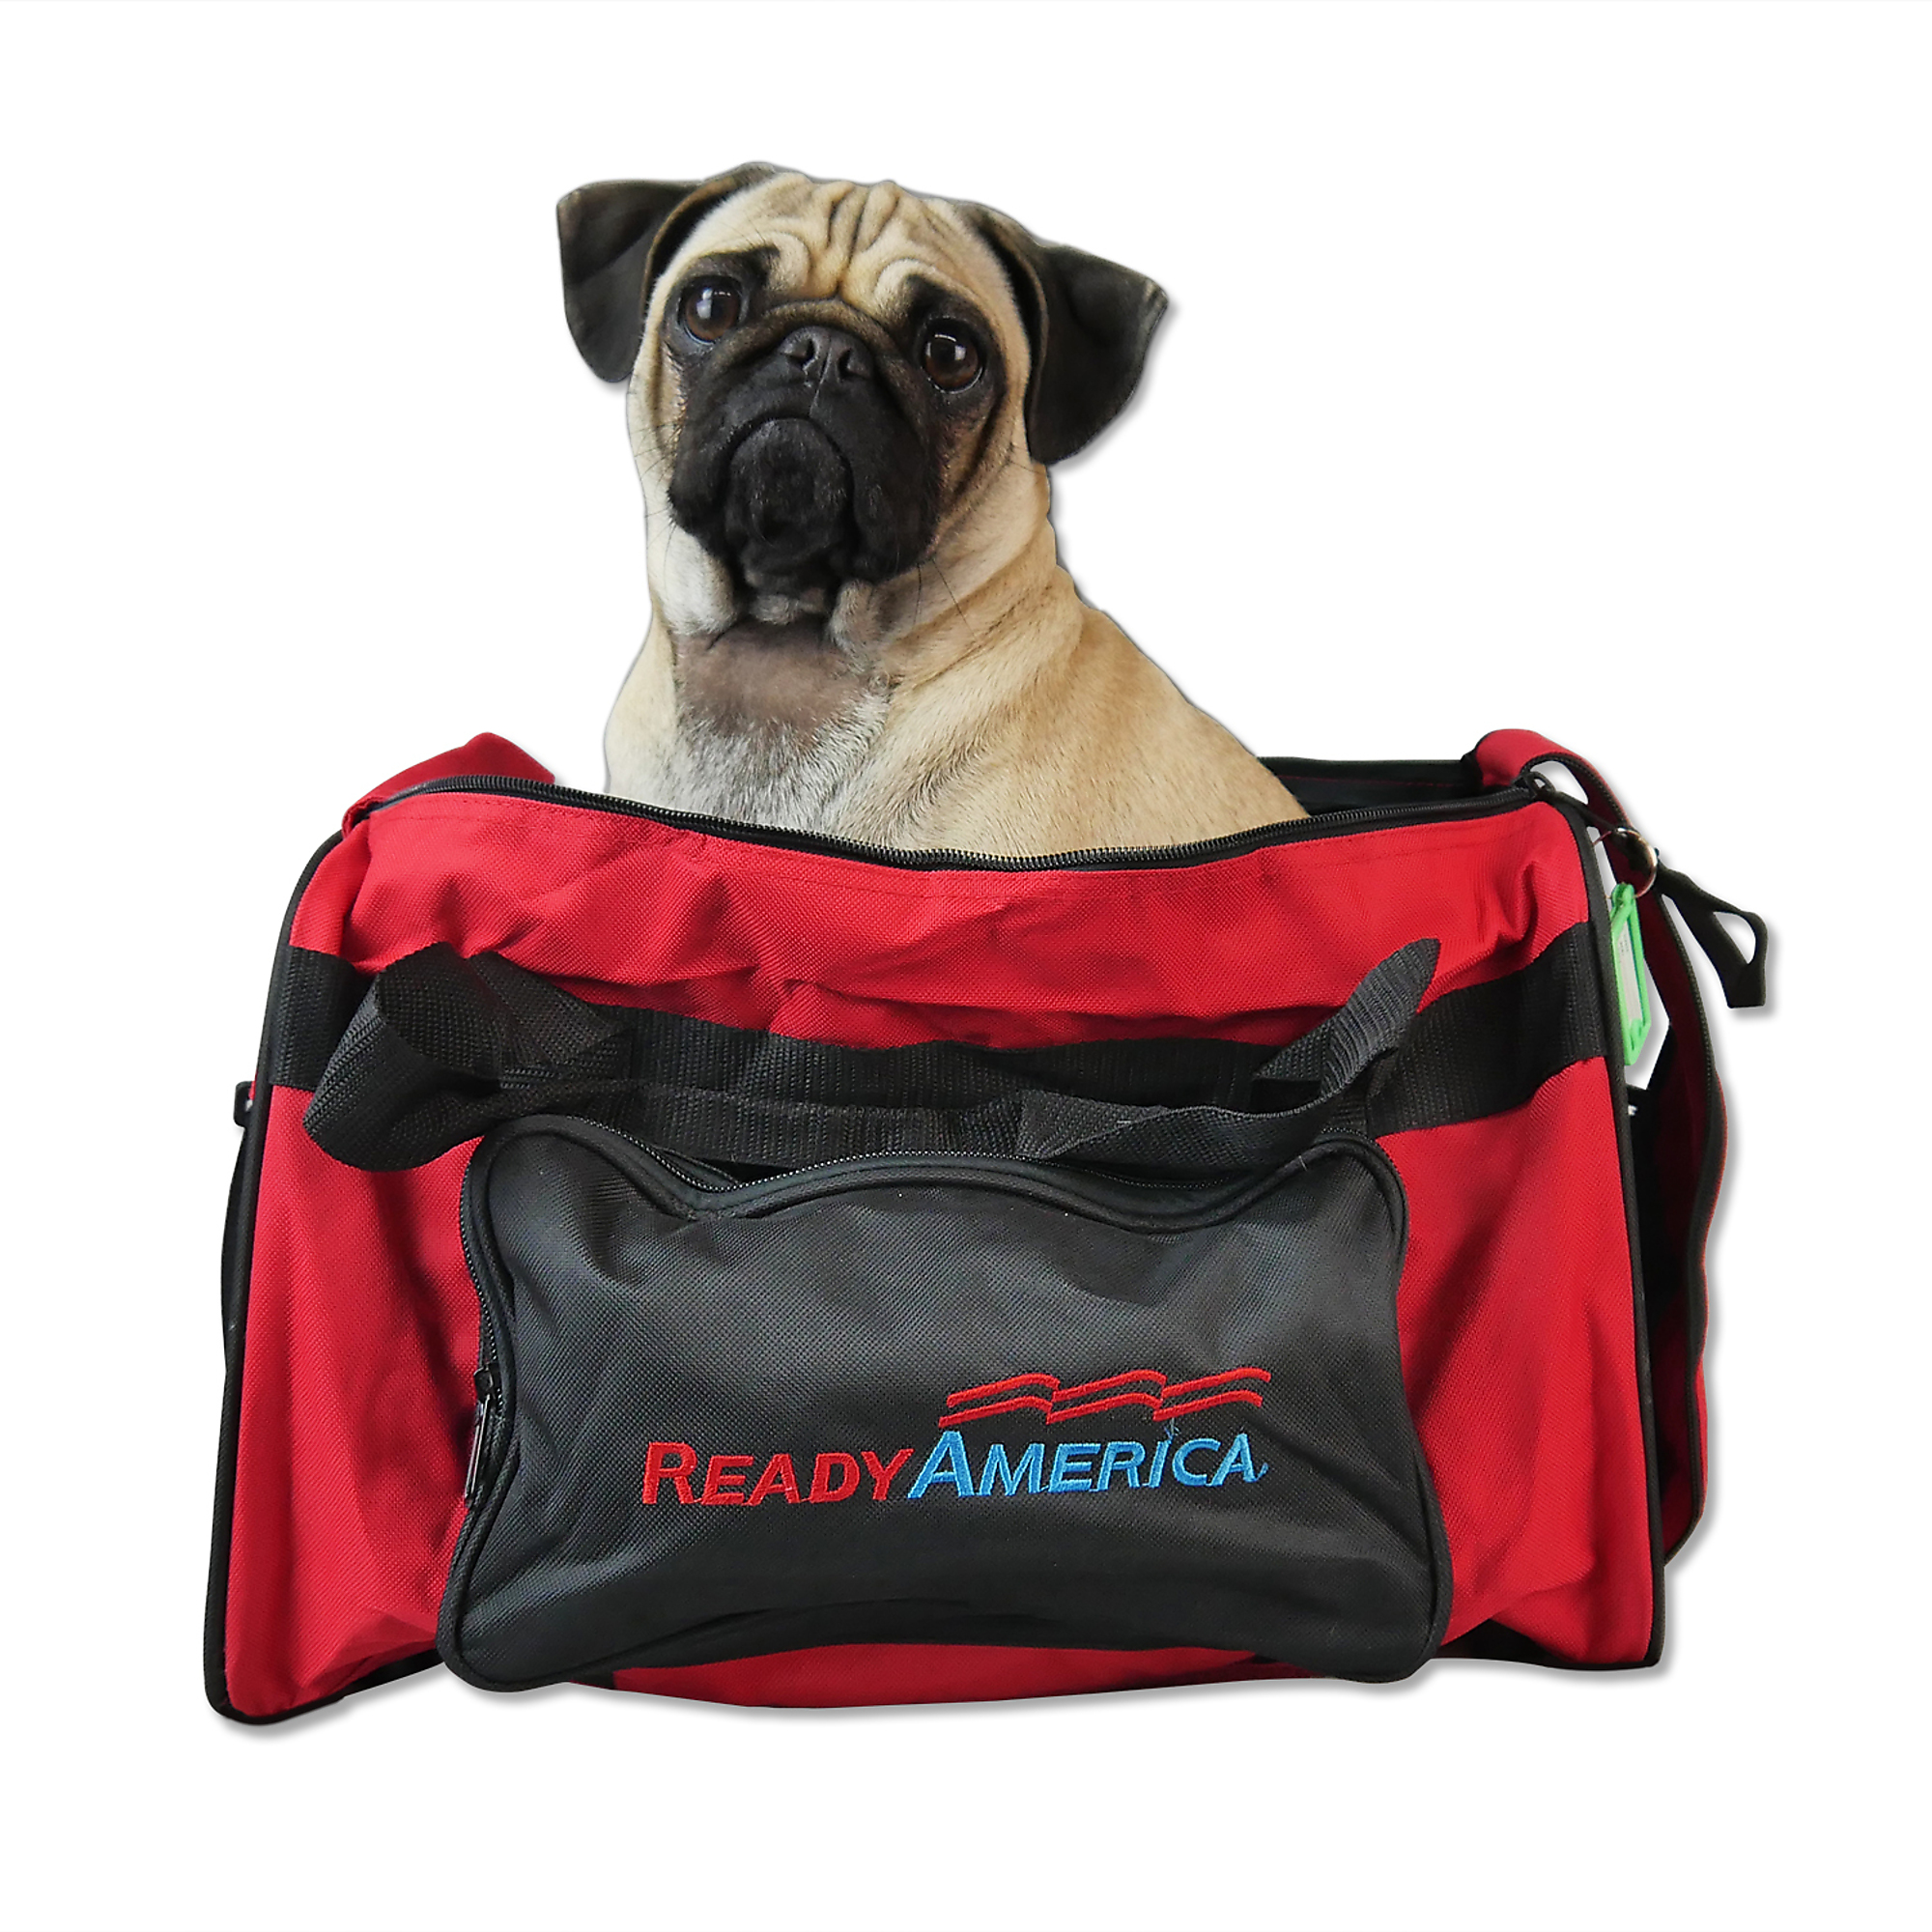 Ready America, 1 Small Dog, 3 Day, Evacuation Kit, Pieces (qty.) 25, Model 77150